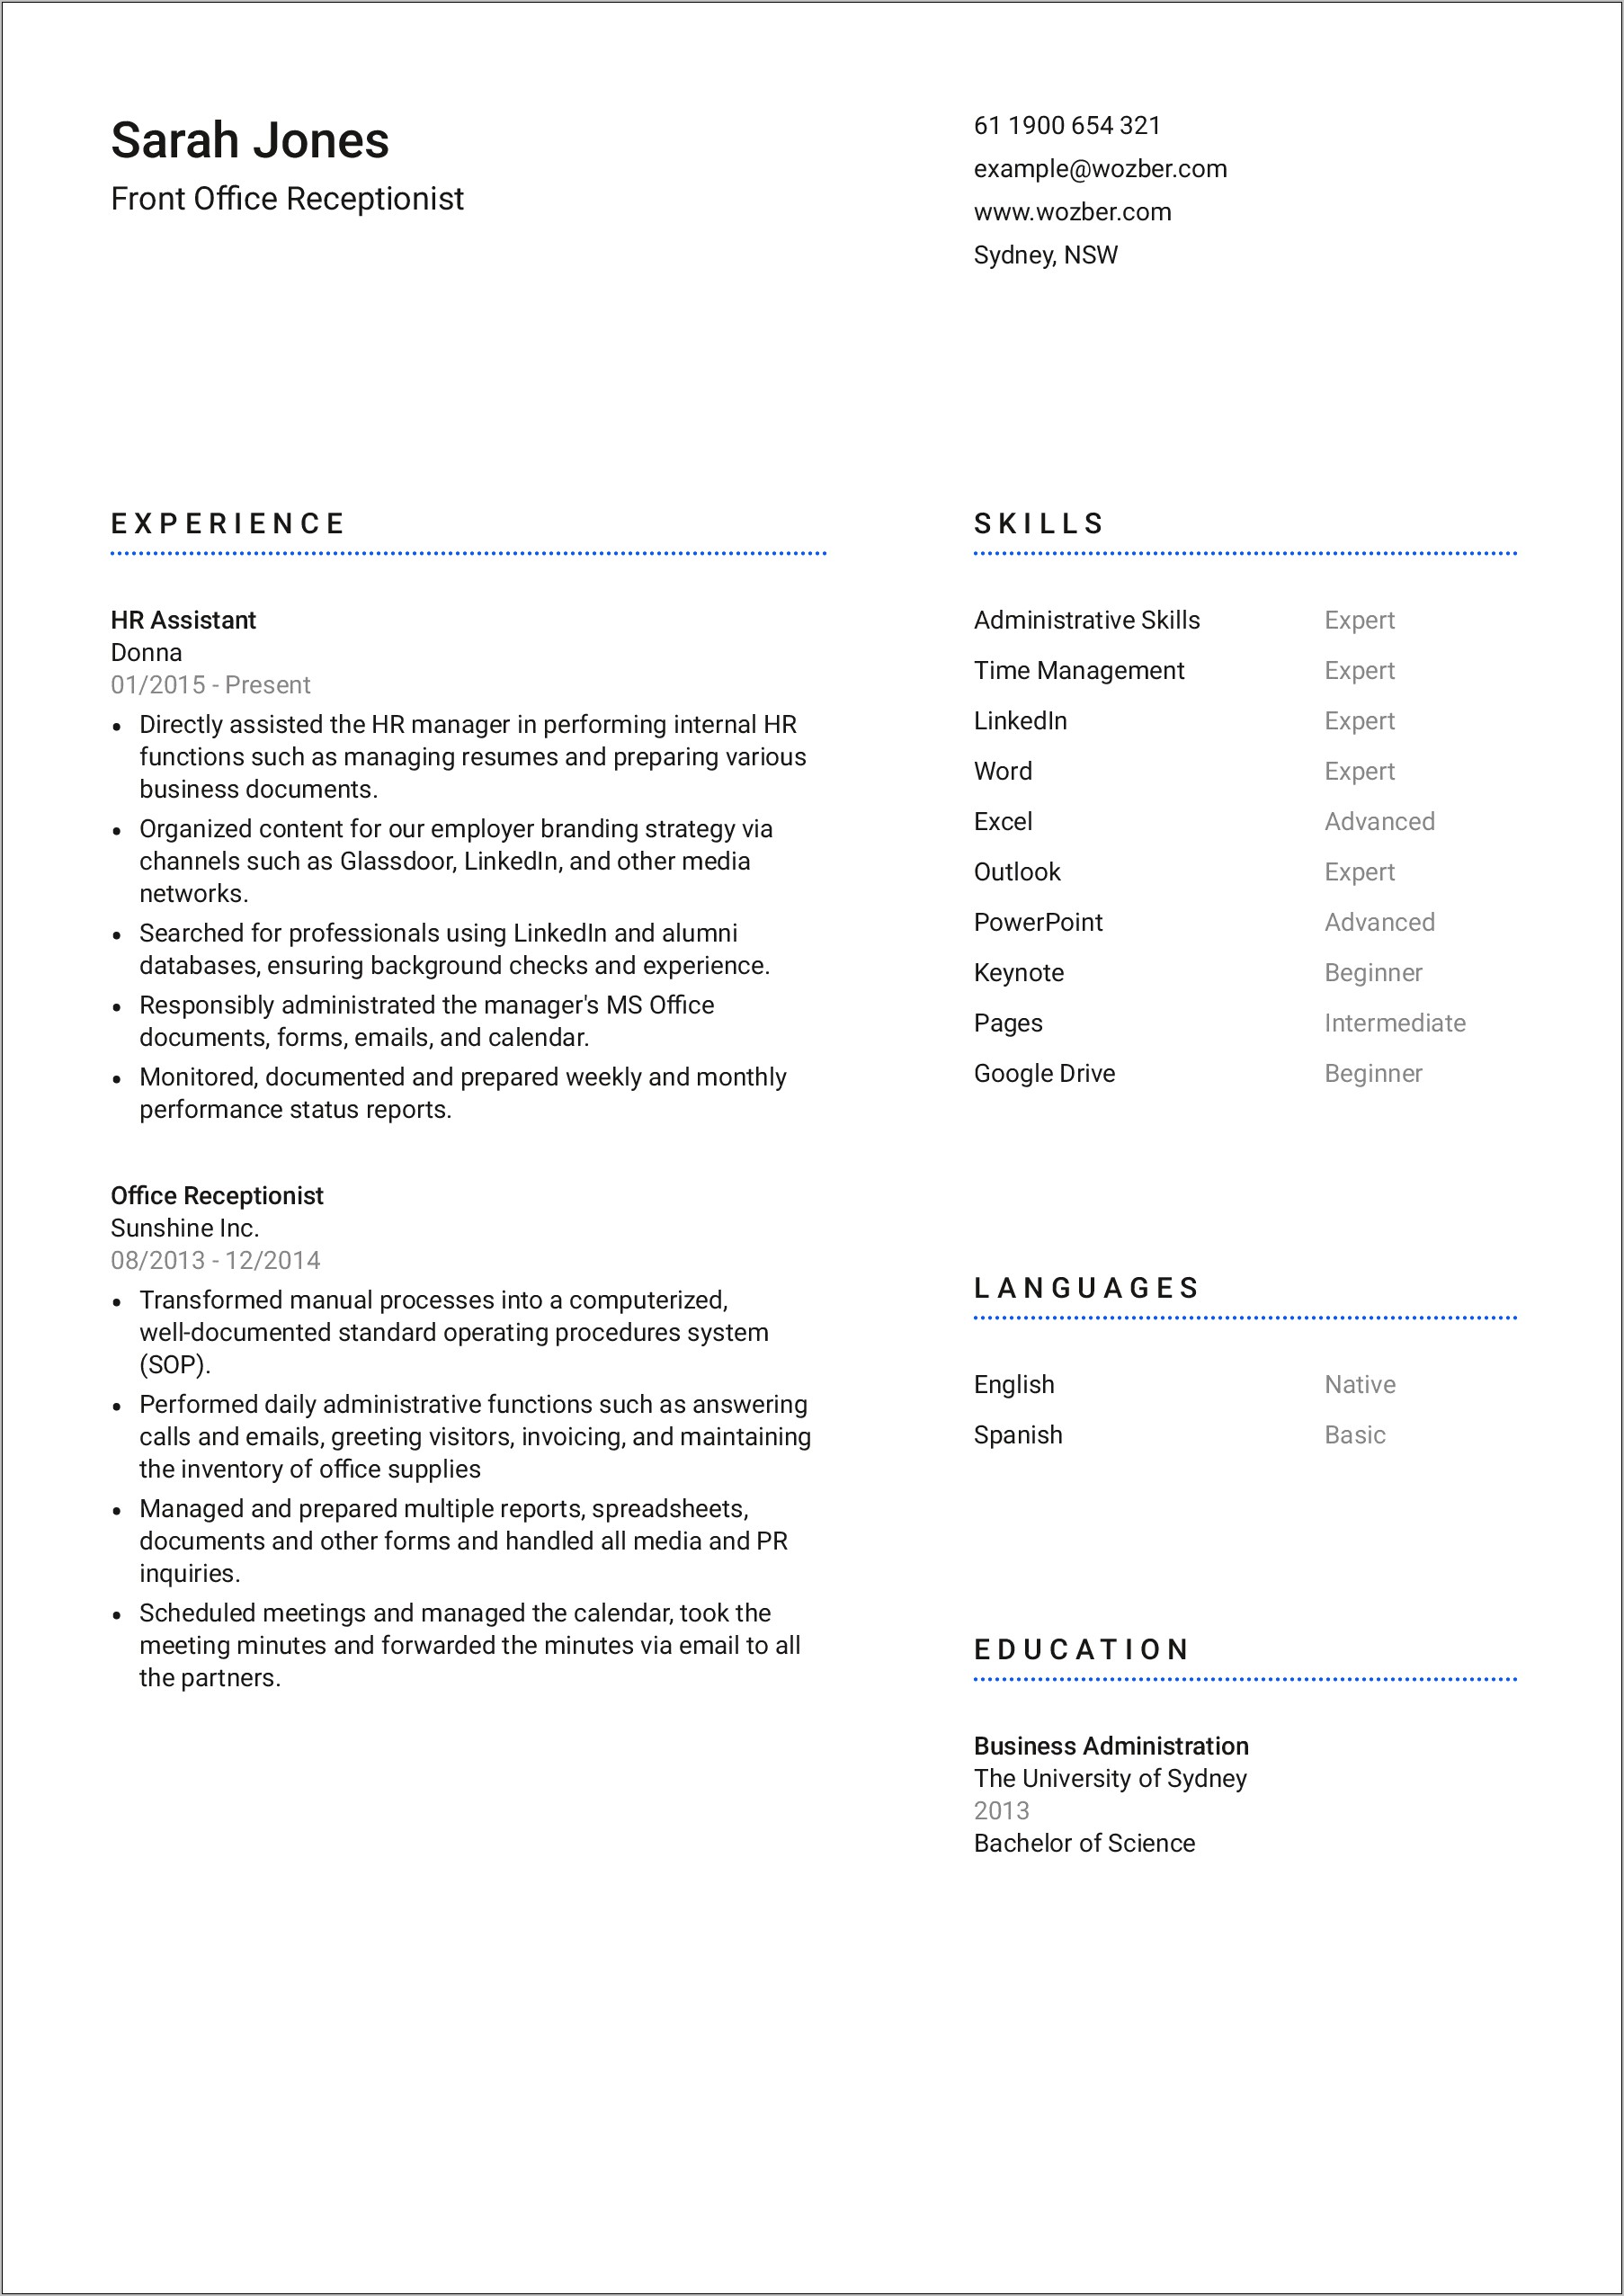 Sample Resume Key Accomplishments Examples